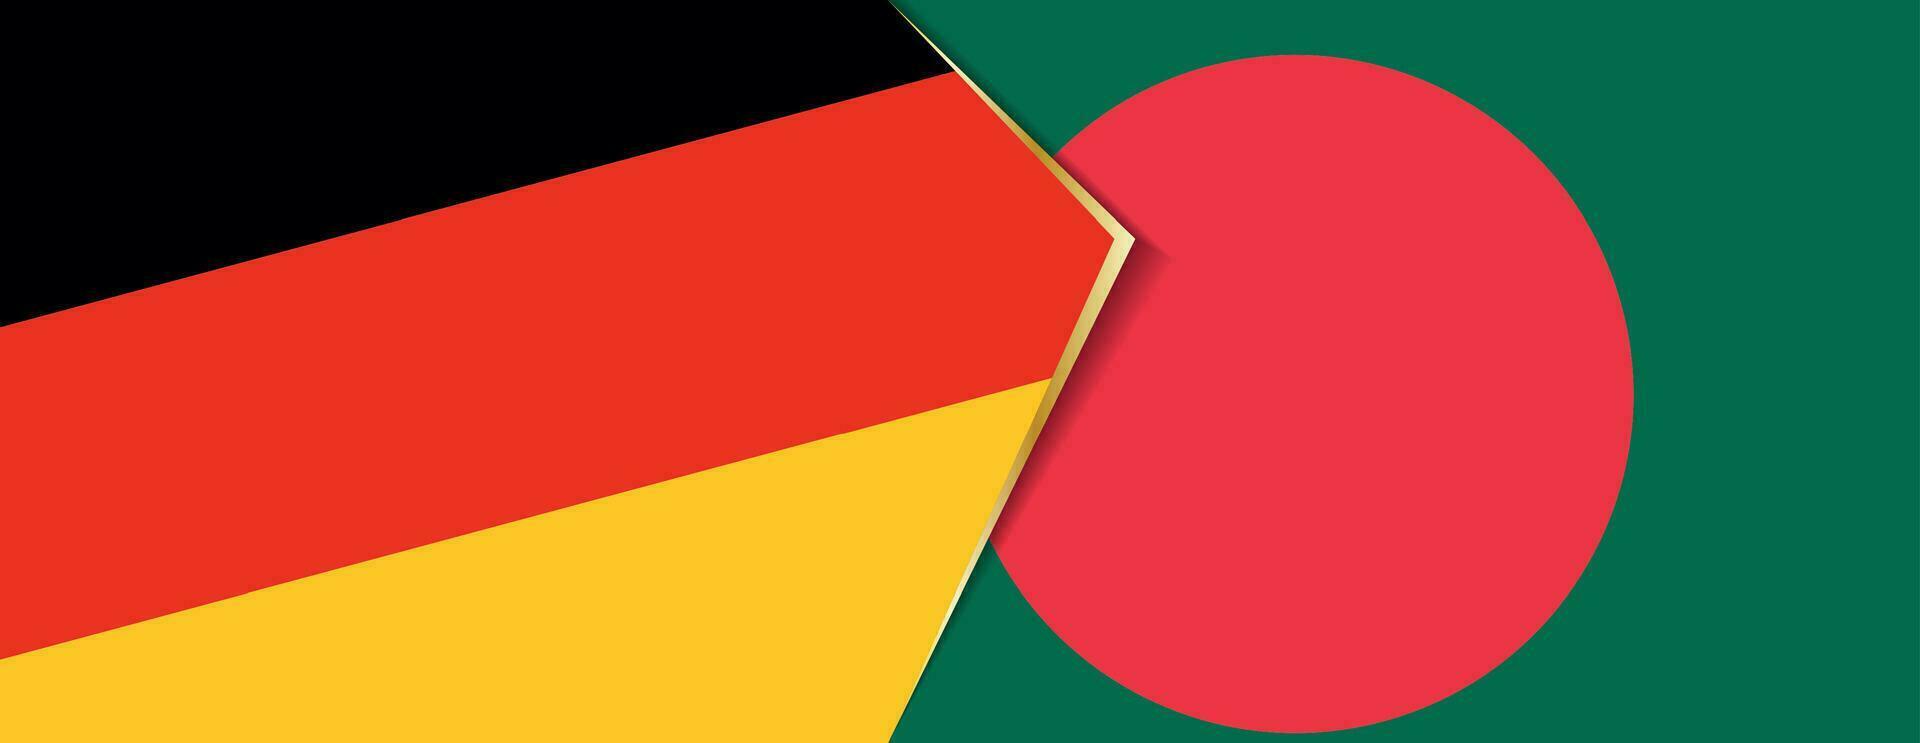 Germania e bangladesh bandiere, Due vettore bandiere.